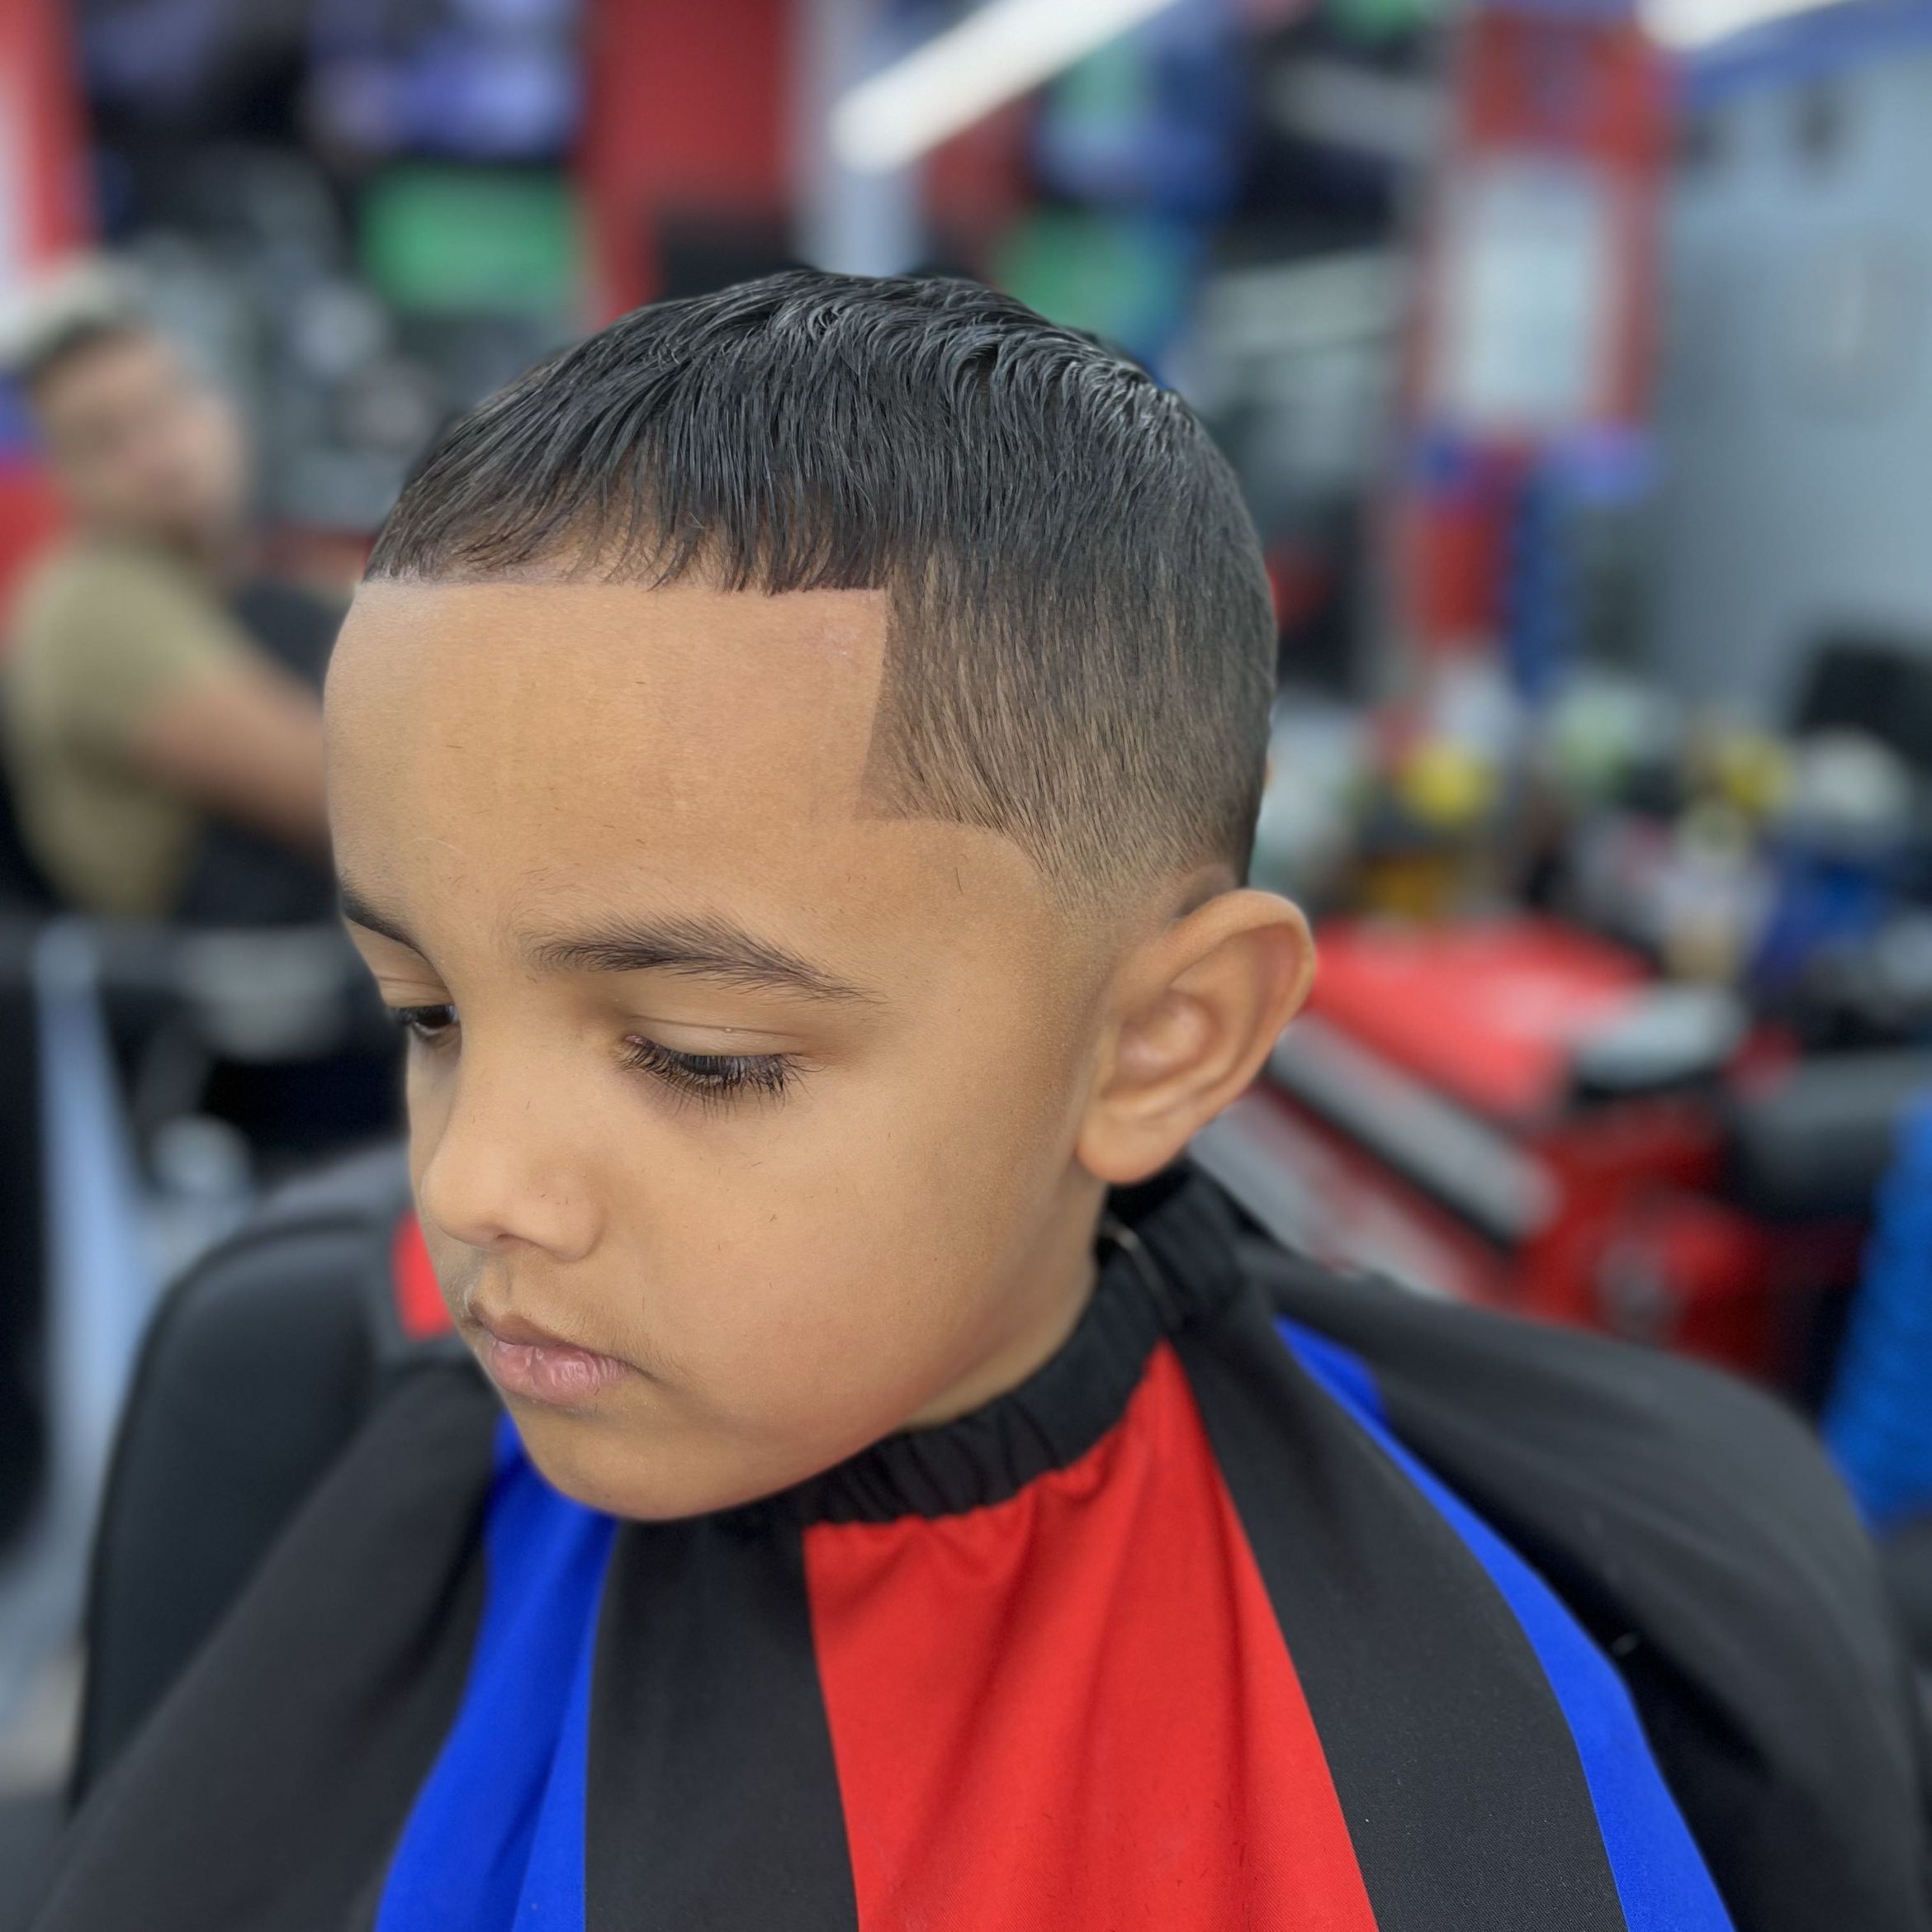 Kids Regular haircuts [UNDER 12 YEARS OLD] portfolio